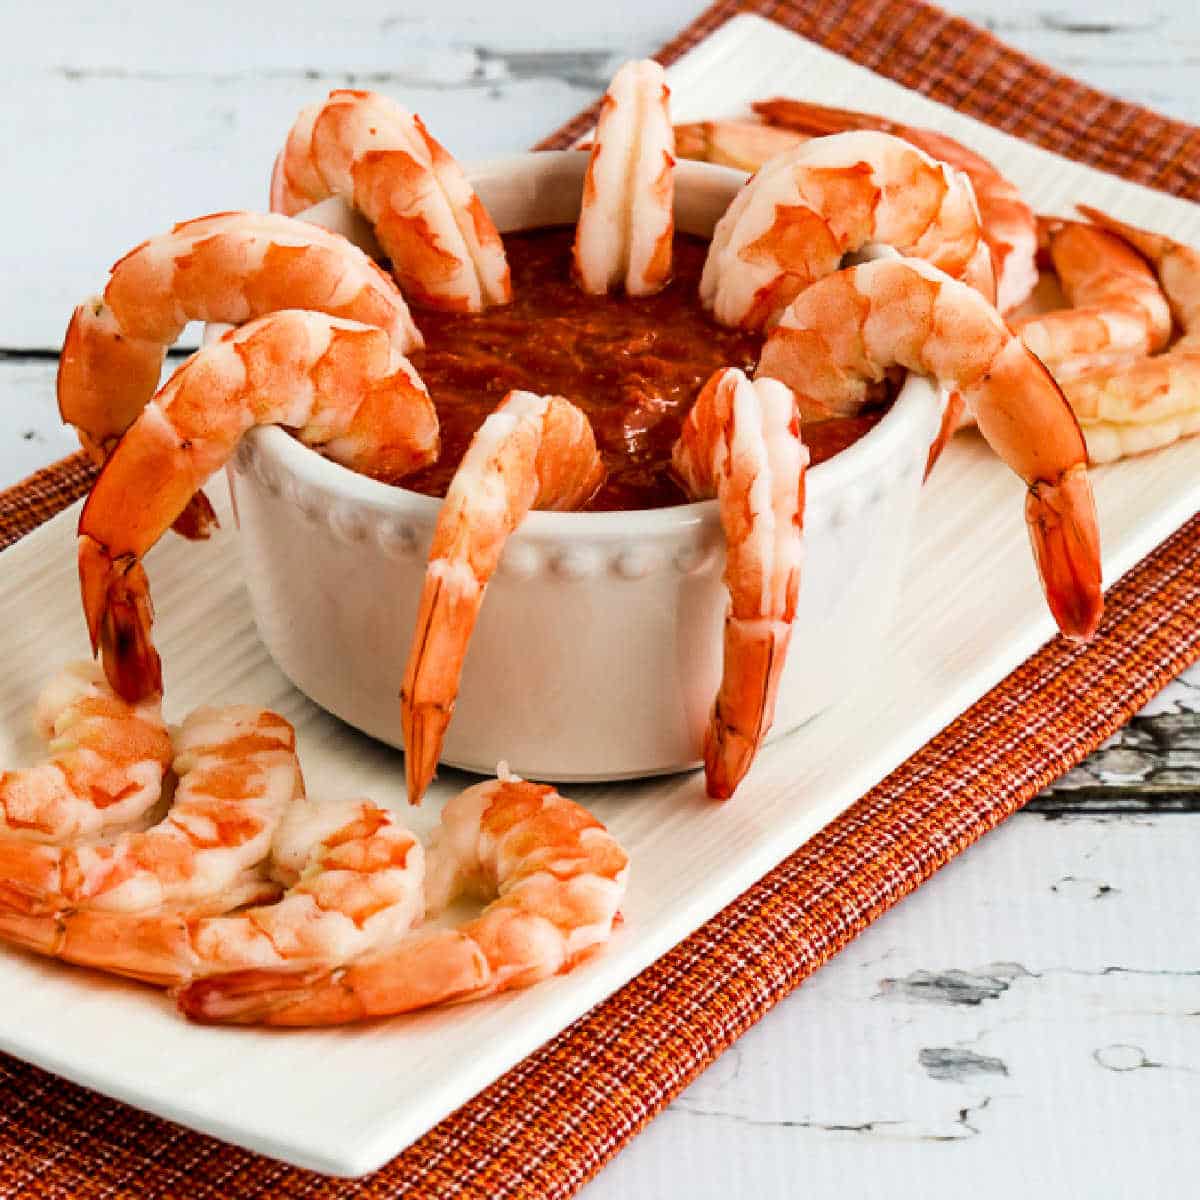 Shrimp with Keto Cocktail Sauce shown on serving platter.